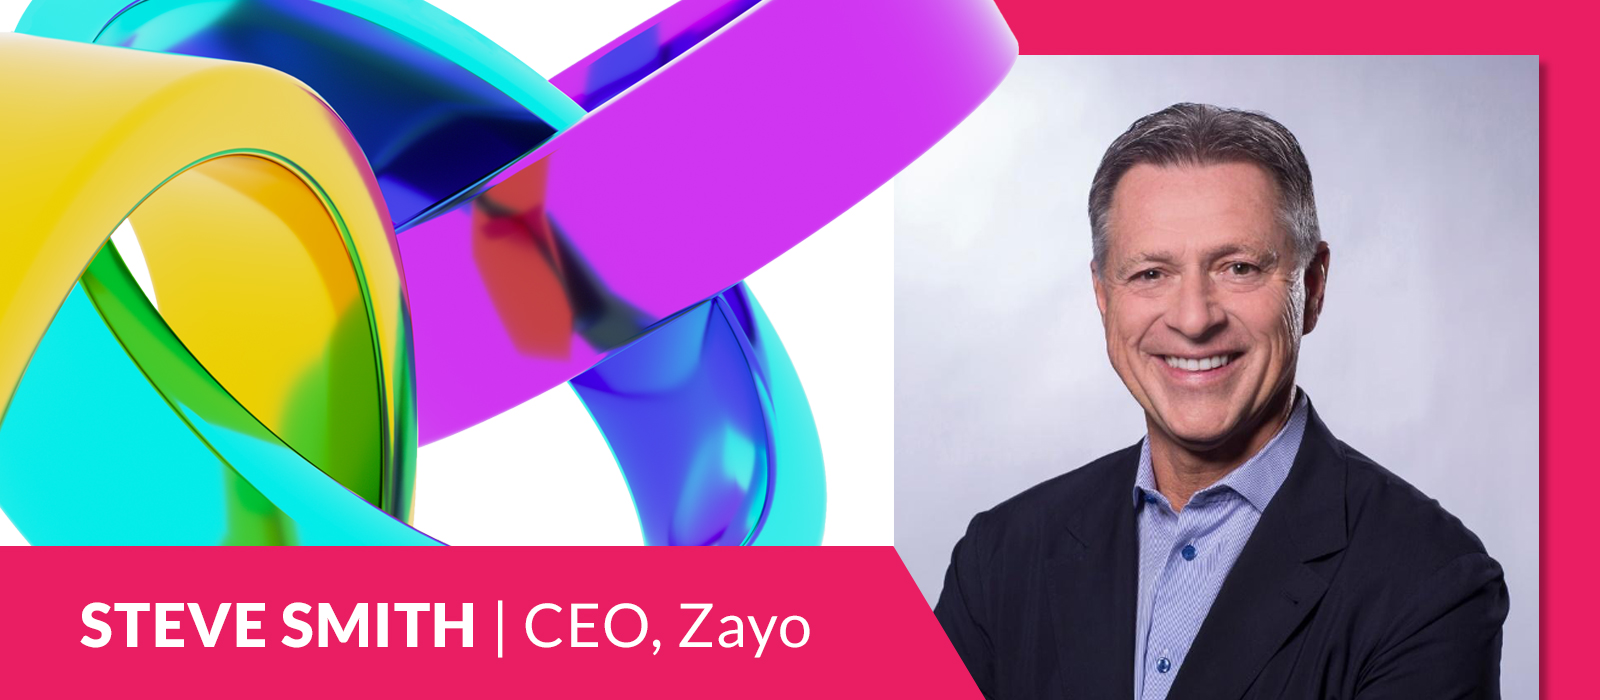 Steve Smith, CEO, Zayo